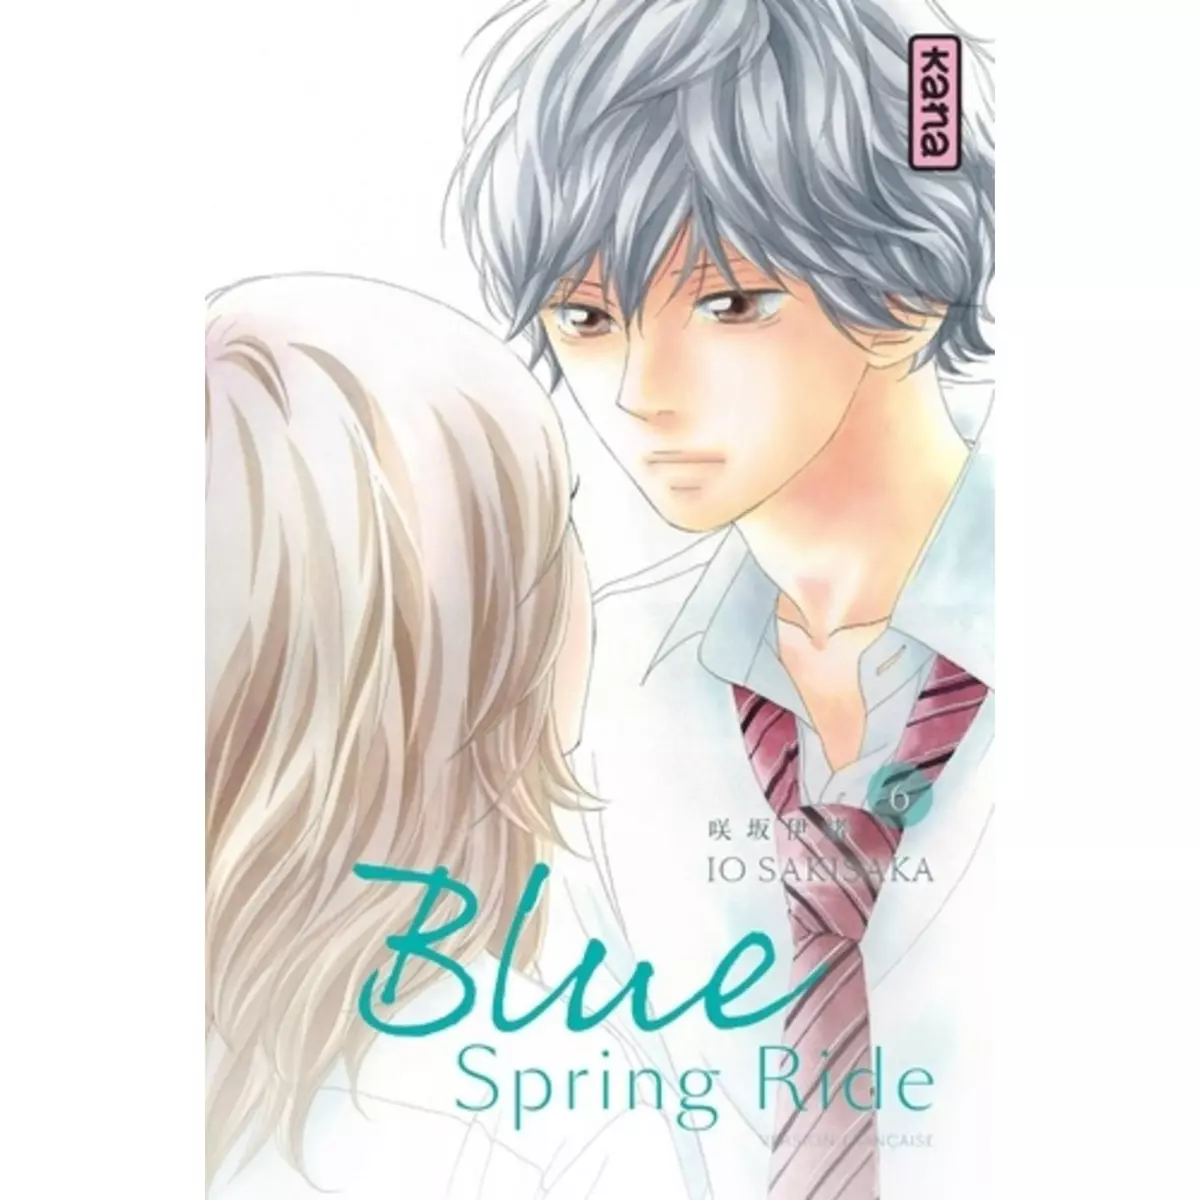  BLUE SPRING RIDE TOME 6, Sakisaka Io